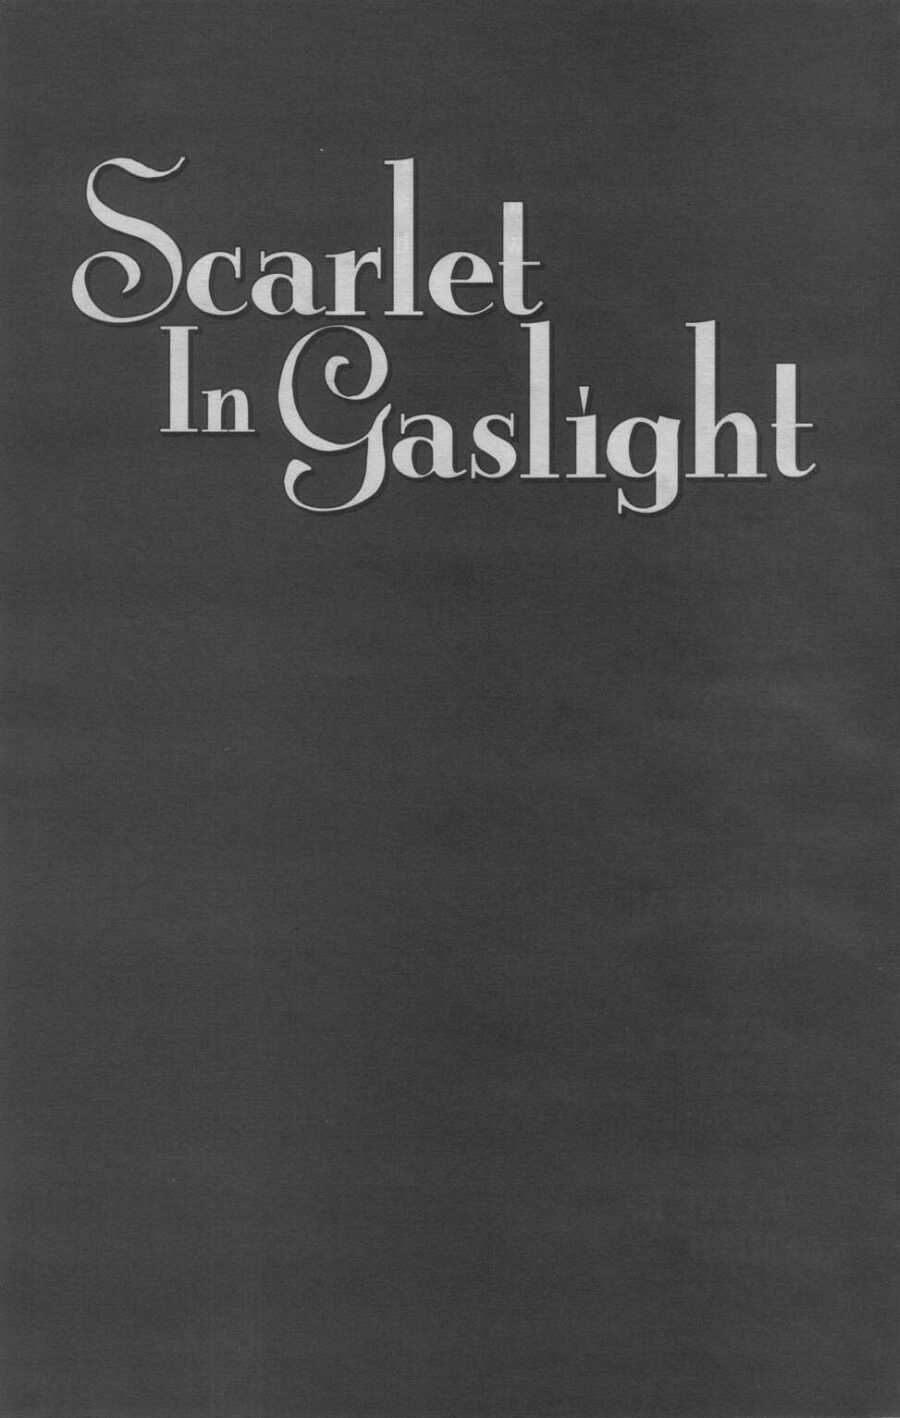 Read online Scarlet in Gaslight comic -  Issue # TPB - 3